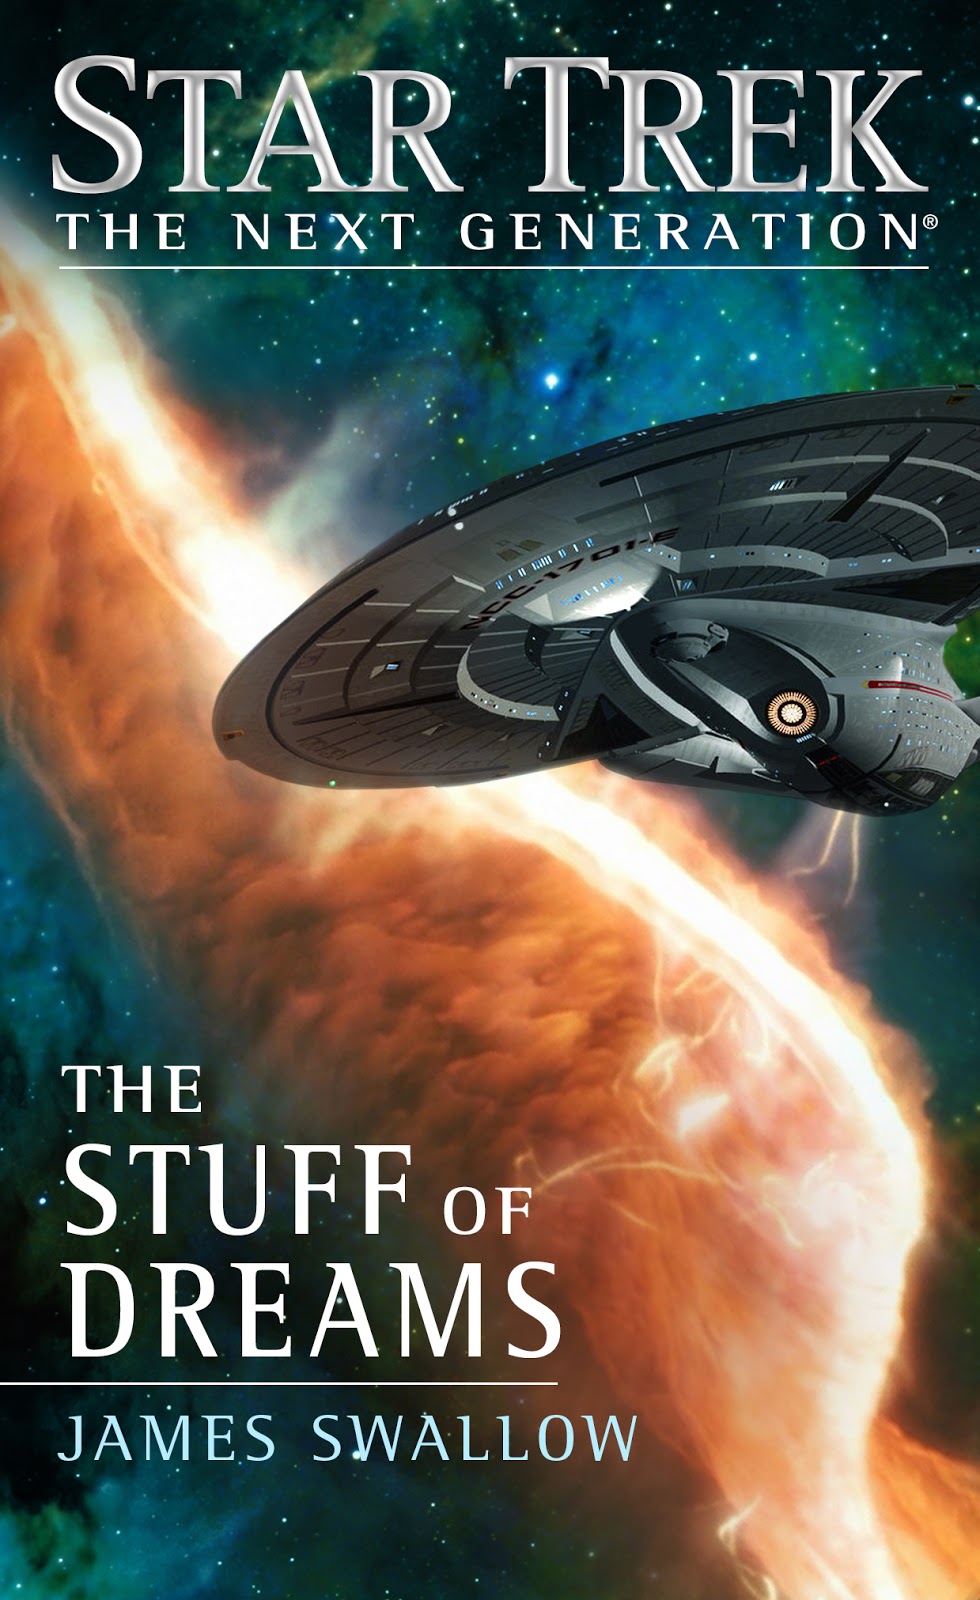 The Trek Collective Latest Trek book covers